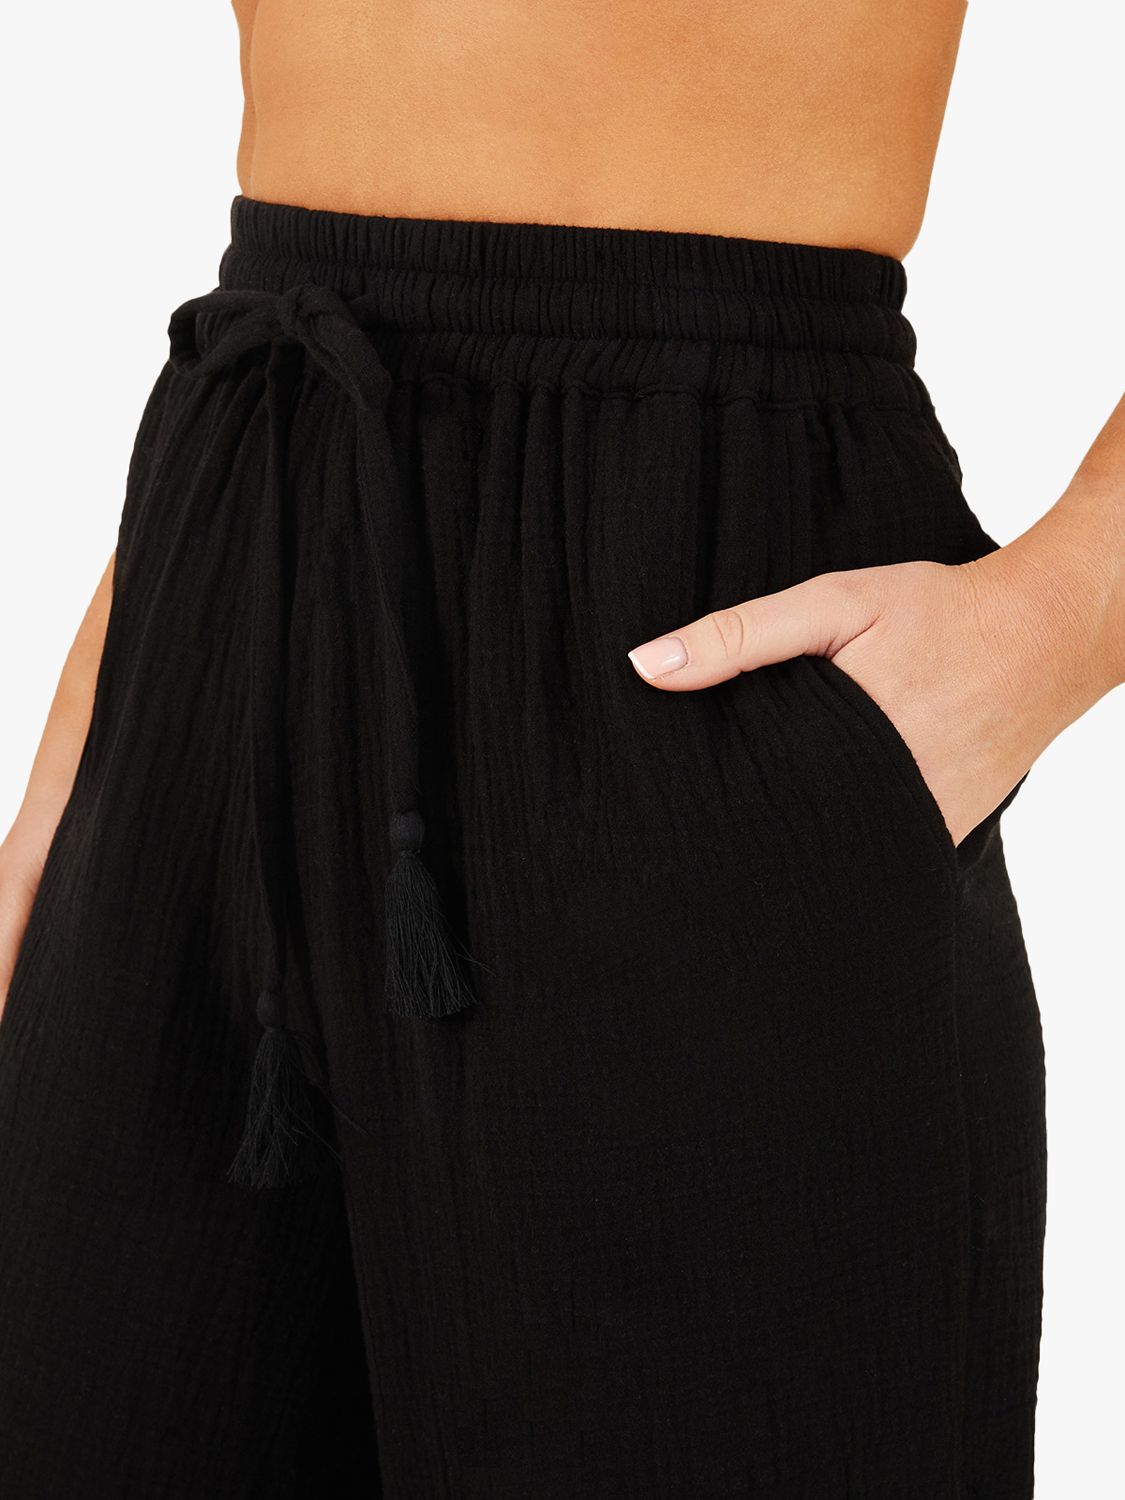 Accessorize Crinkle Cotton Beach Trousers, Black, XS